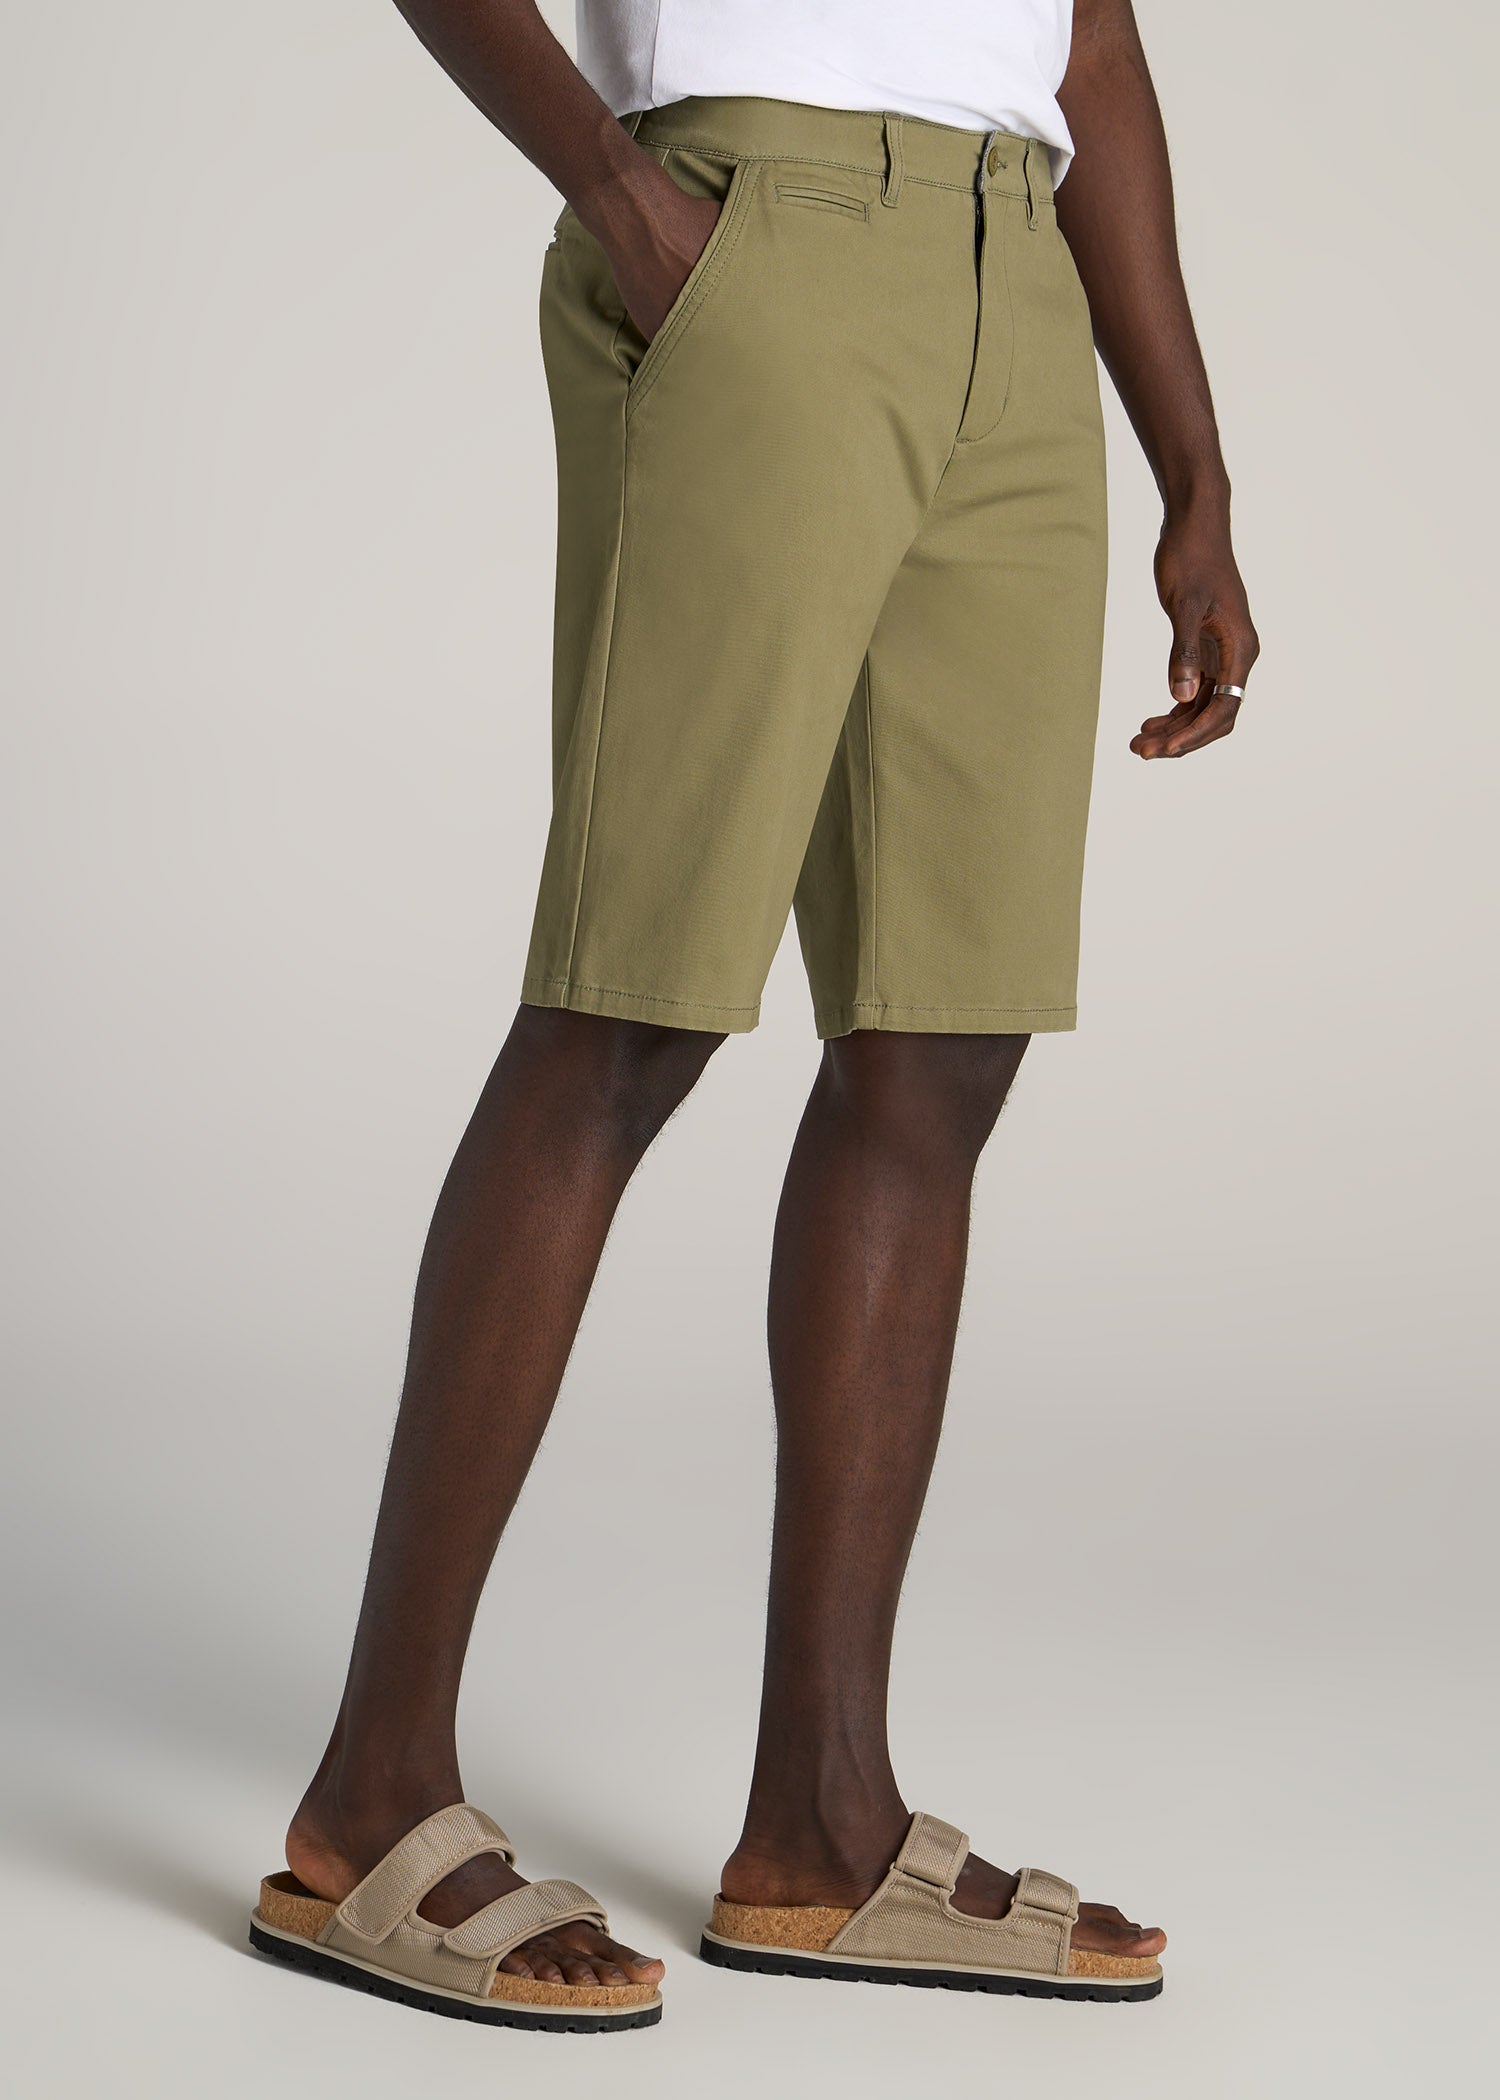       American-Tall-Men-Chino-Shorts-Fatigue-Green-side